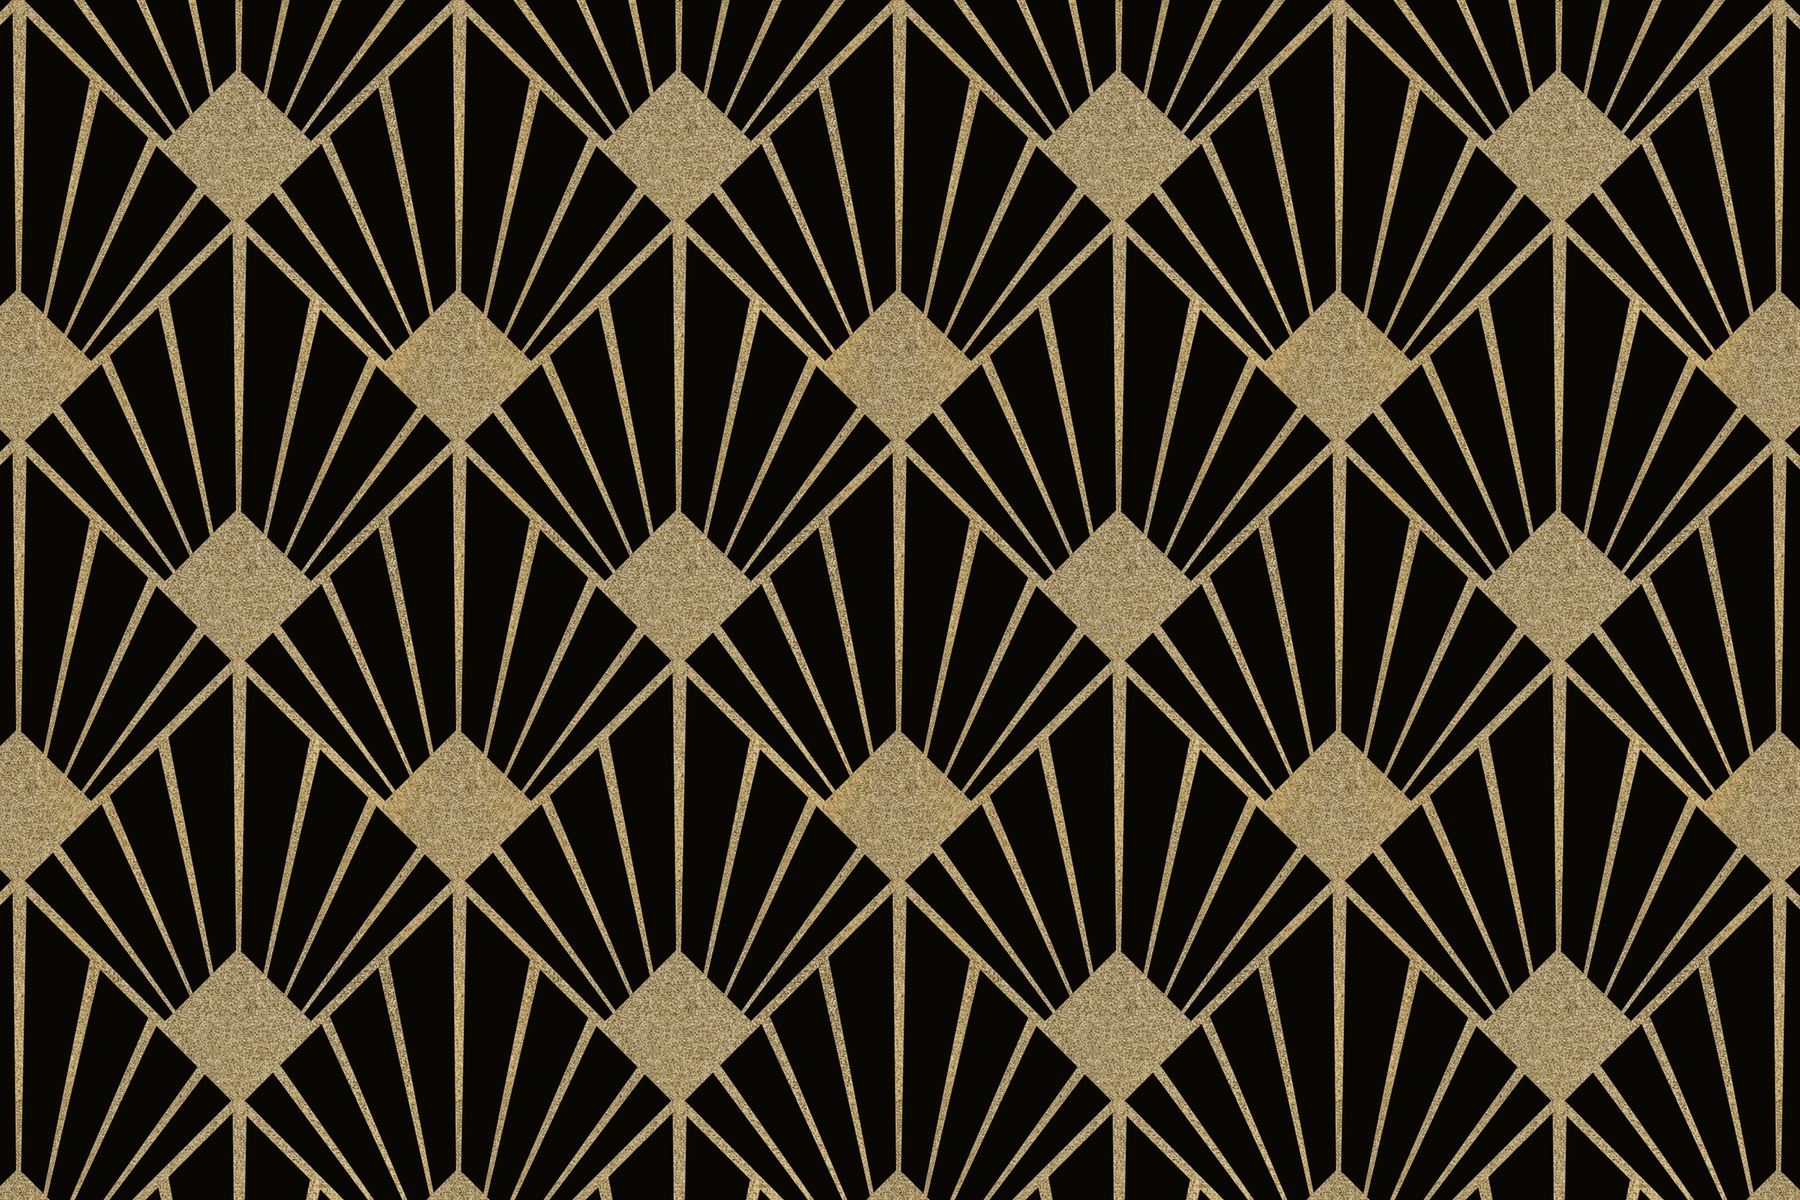 Buy Art Deco Design Gold Black wallpaper - Free shipping at Happywall.co.uk